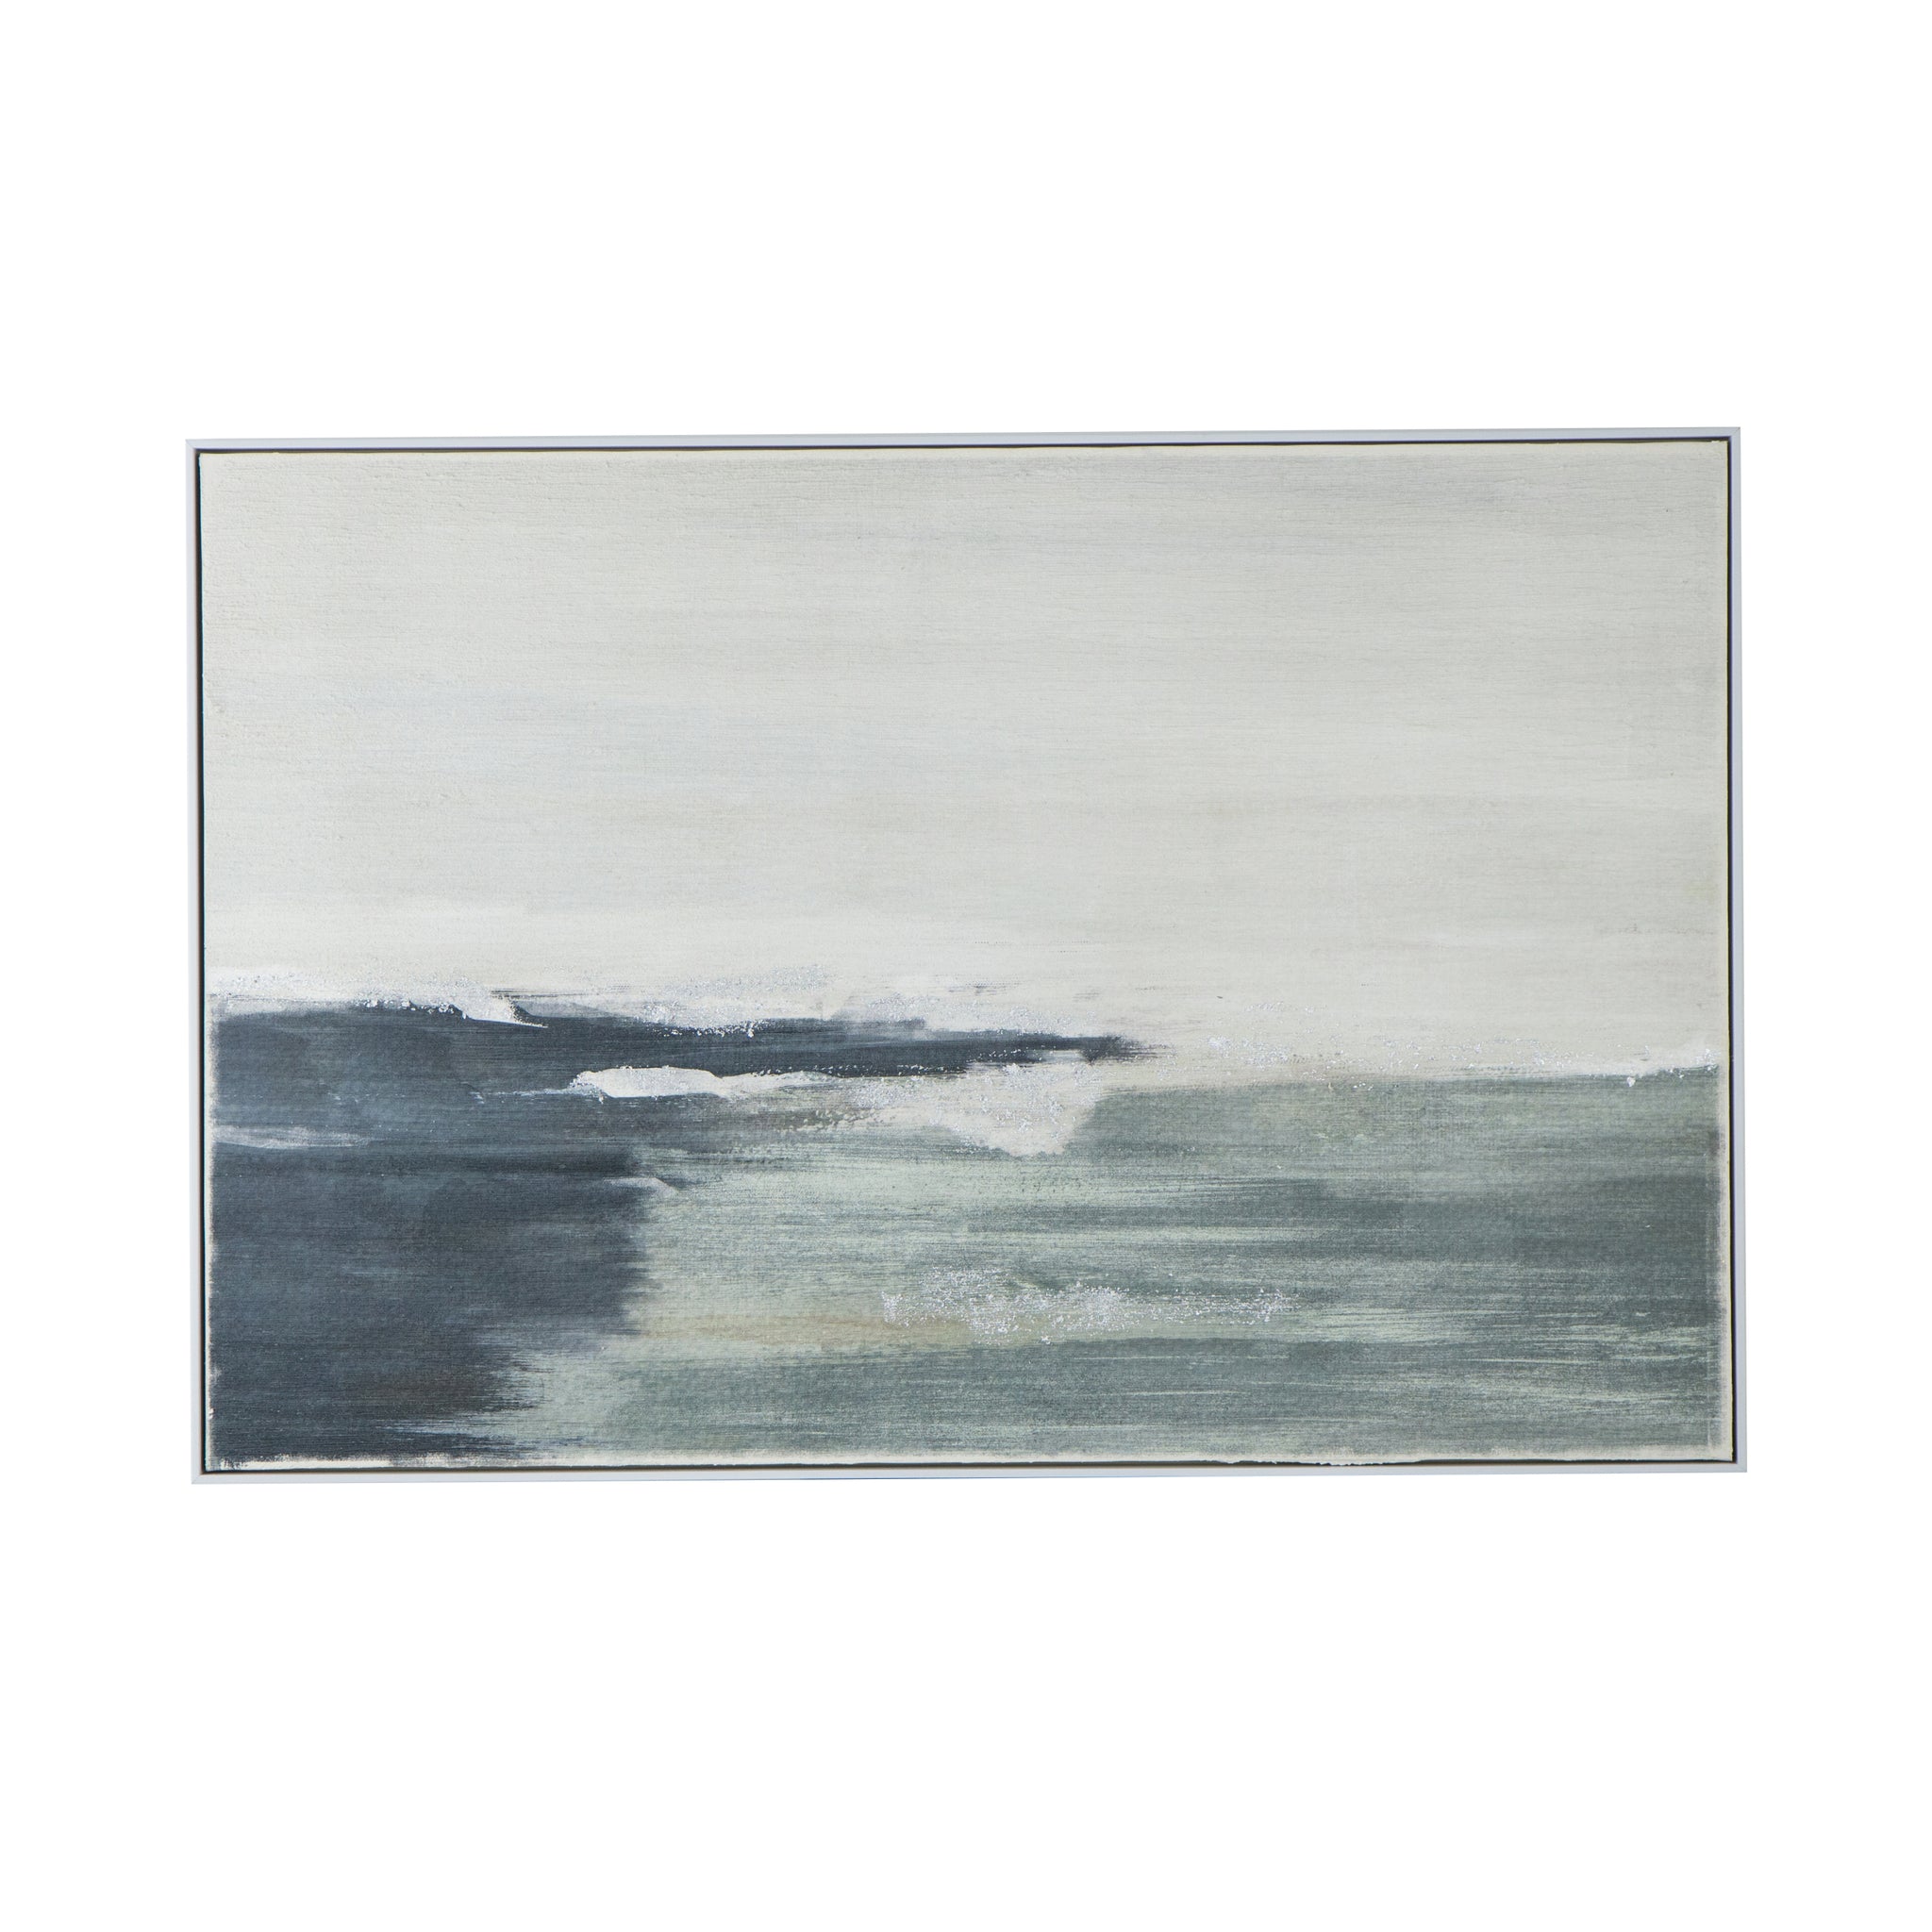 32.5" x 48" Large Rectangle Framed Wall Art Ocean white+blue-canvas